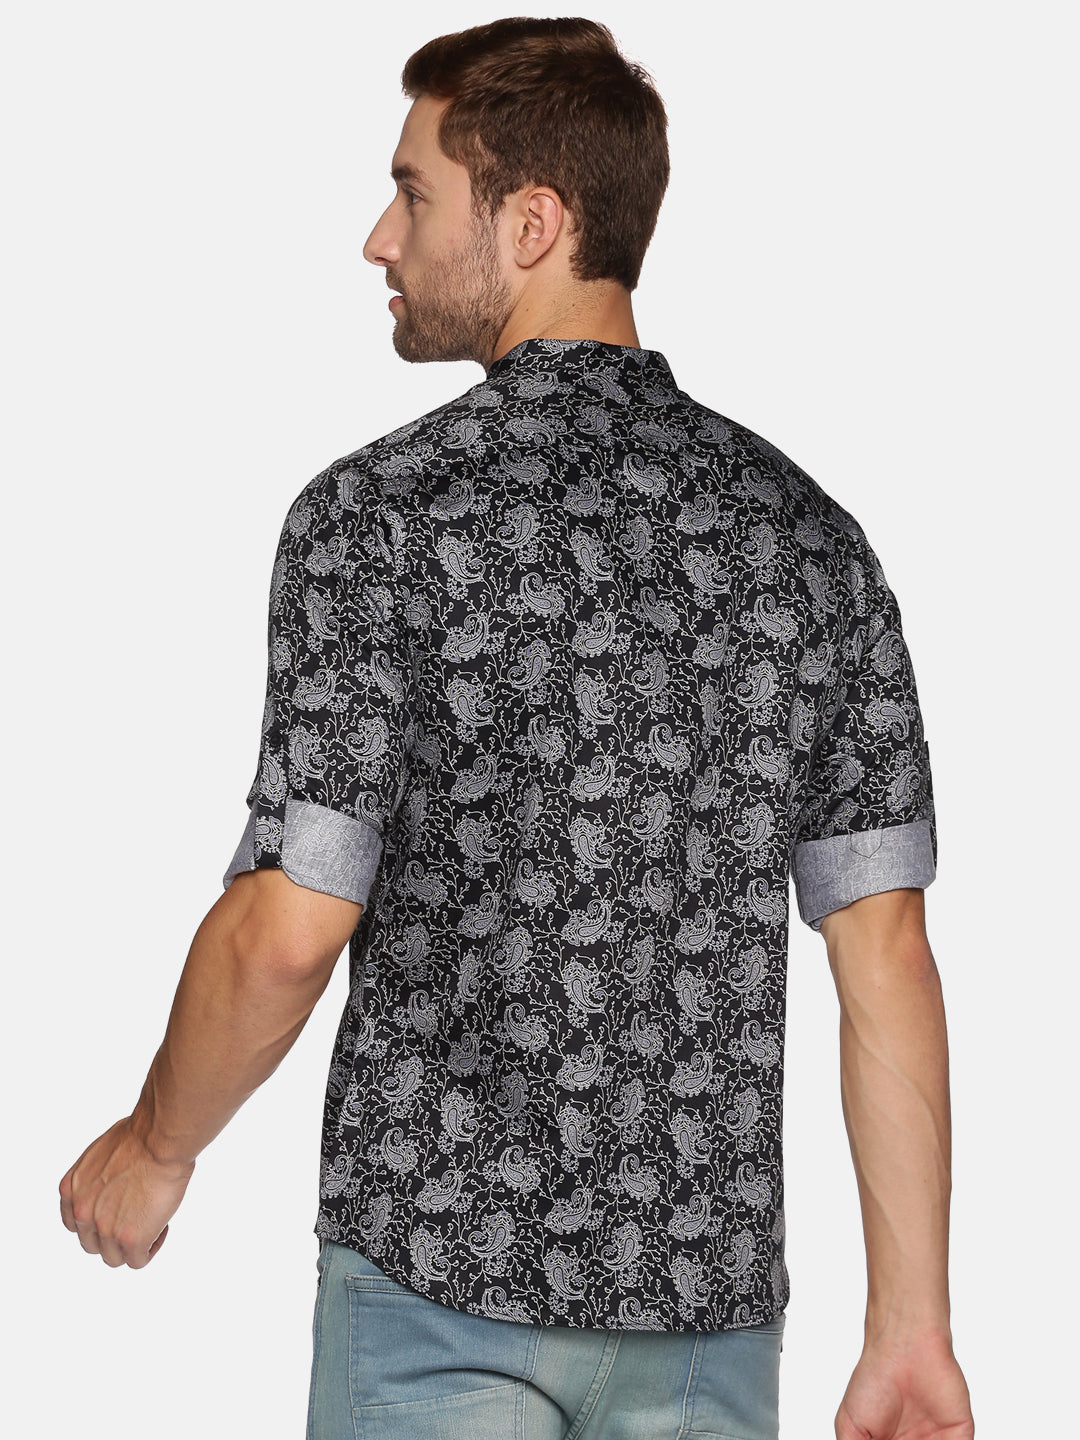 Don Vino Men's Black Printed Full Sleeve Casual Shirt